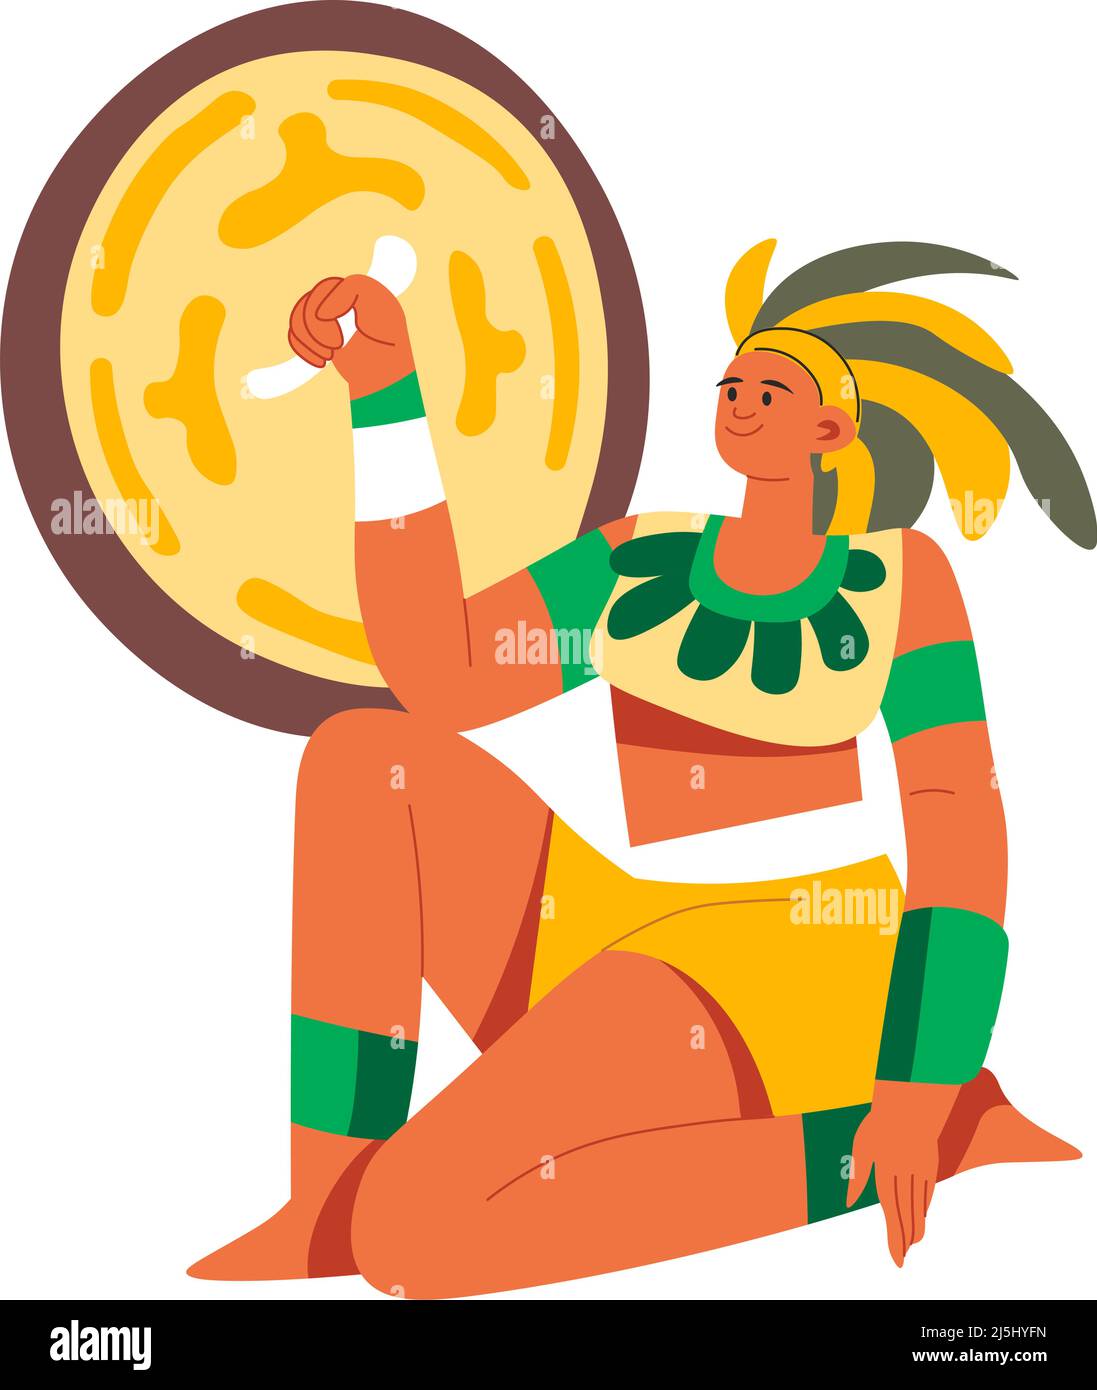 Maya oder azteken Kaiser oder König, Krieger Soldat Stock Vektor